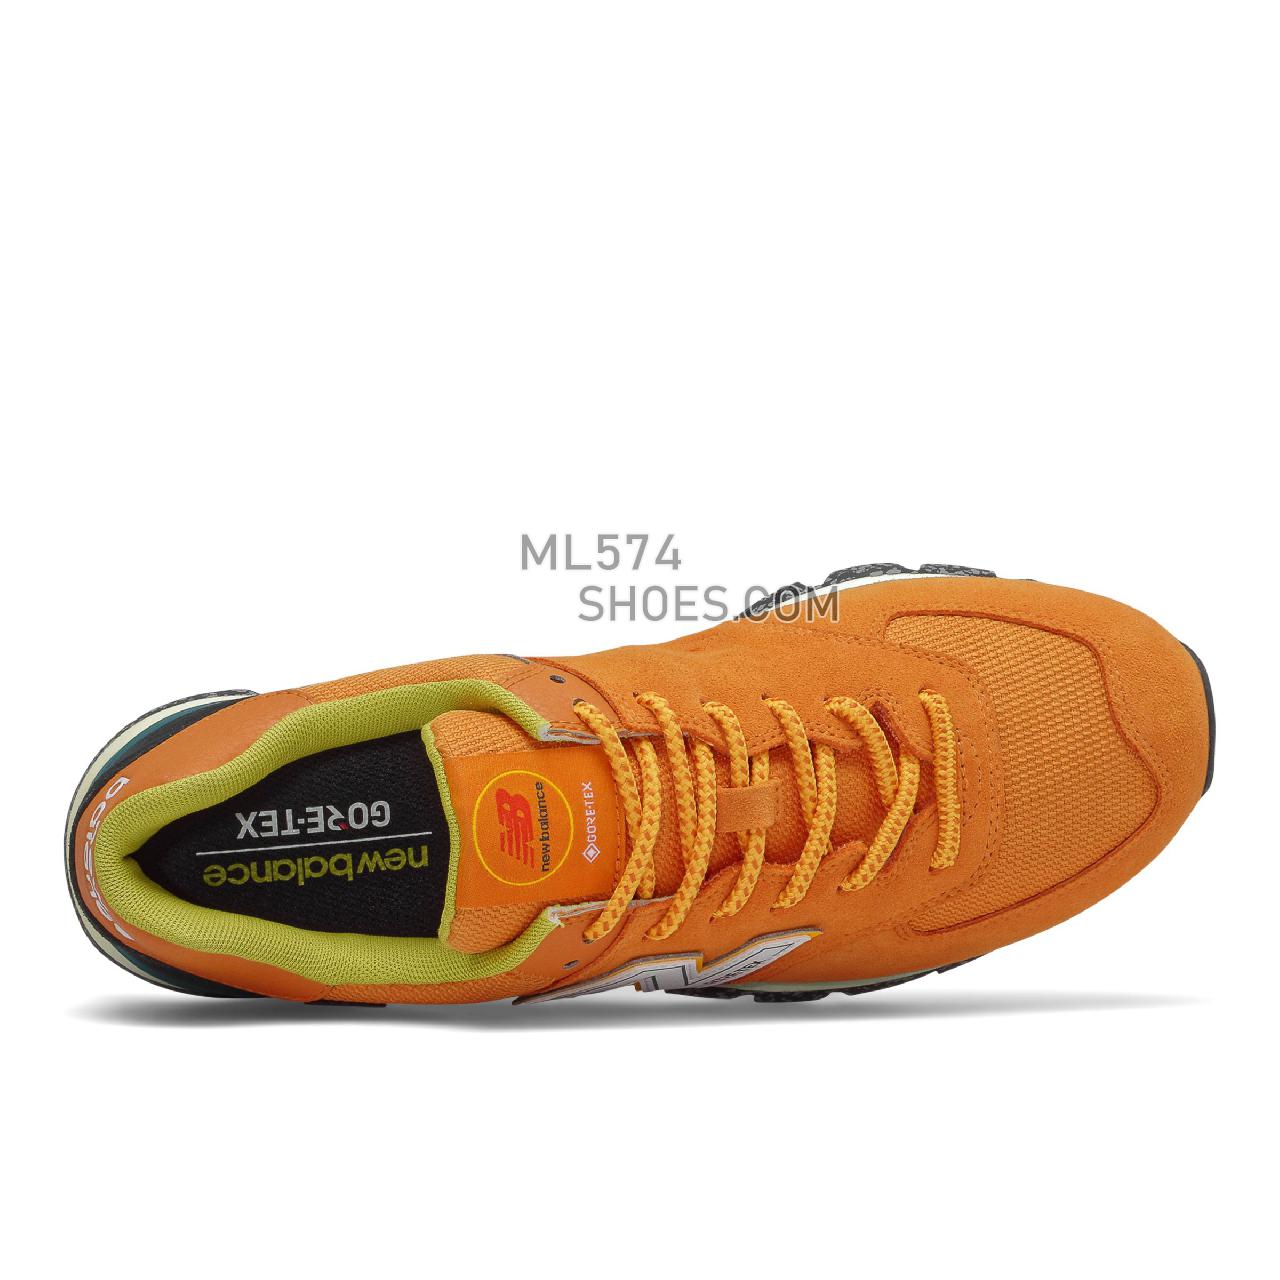 New Balance M574DGV2 - Men's Classic Sneakers - Madras Orange with Black - M574DGEX